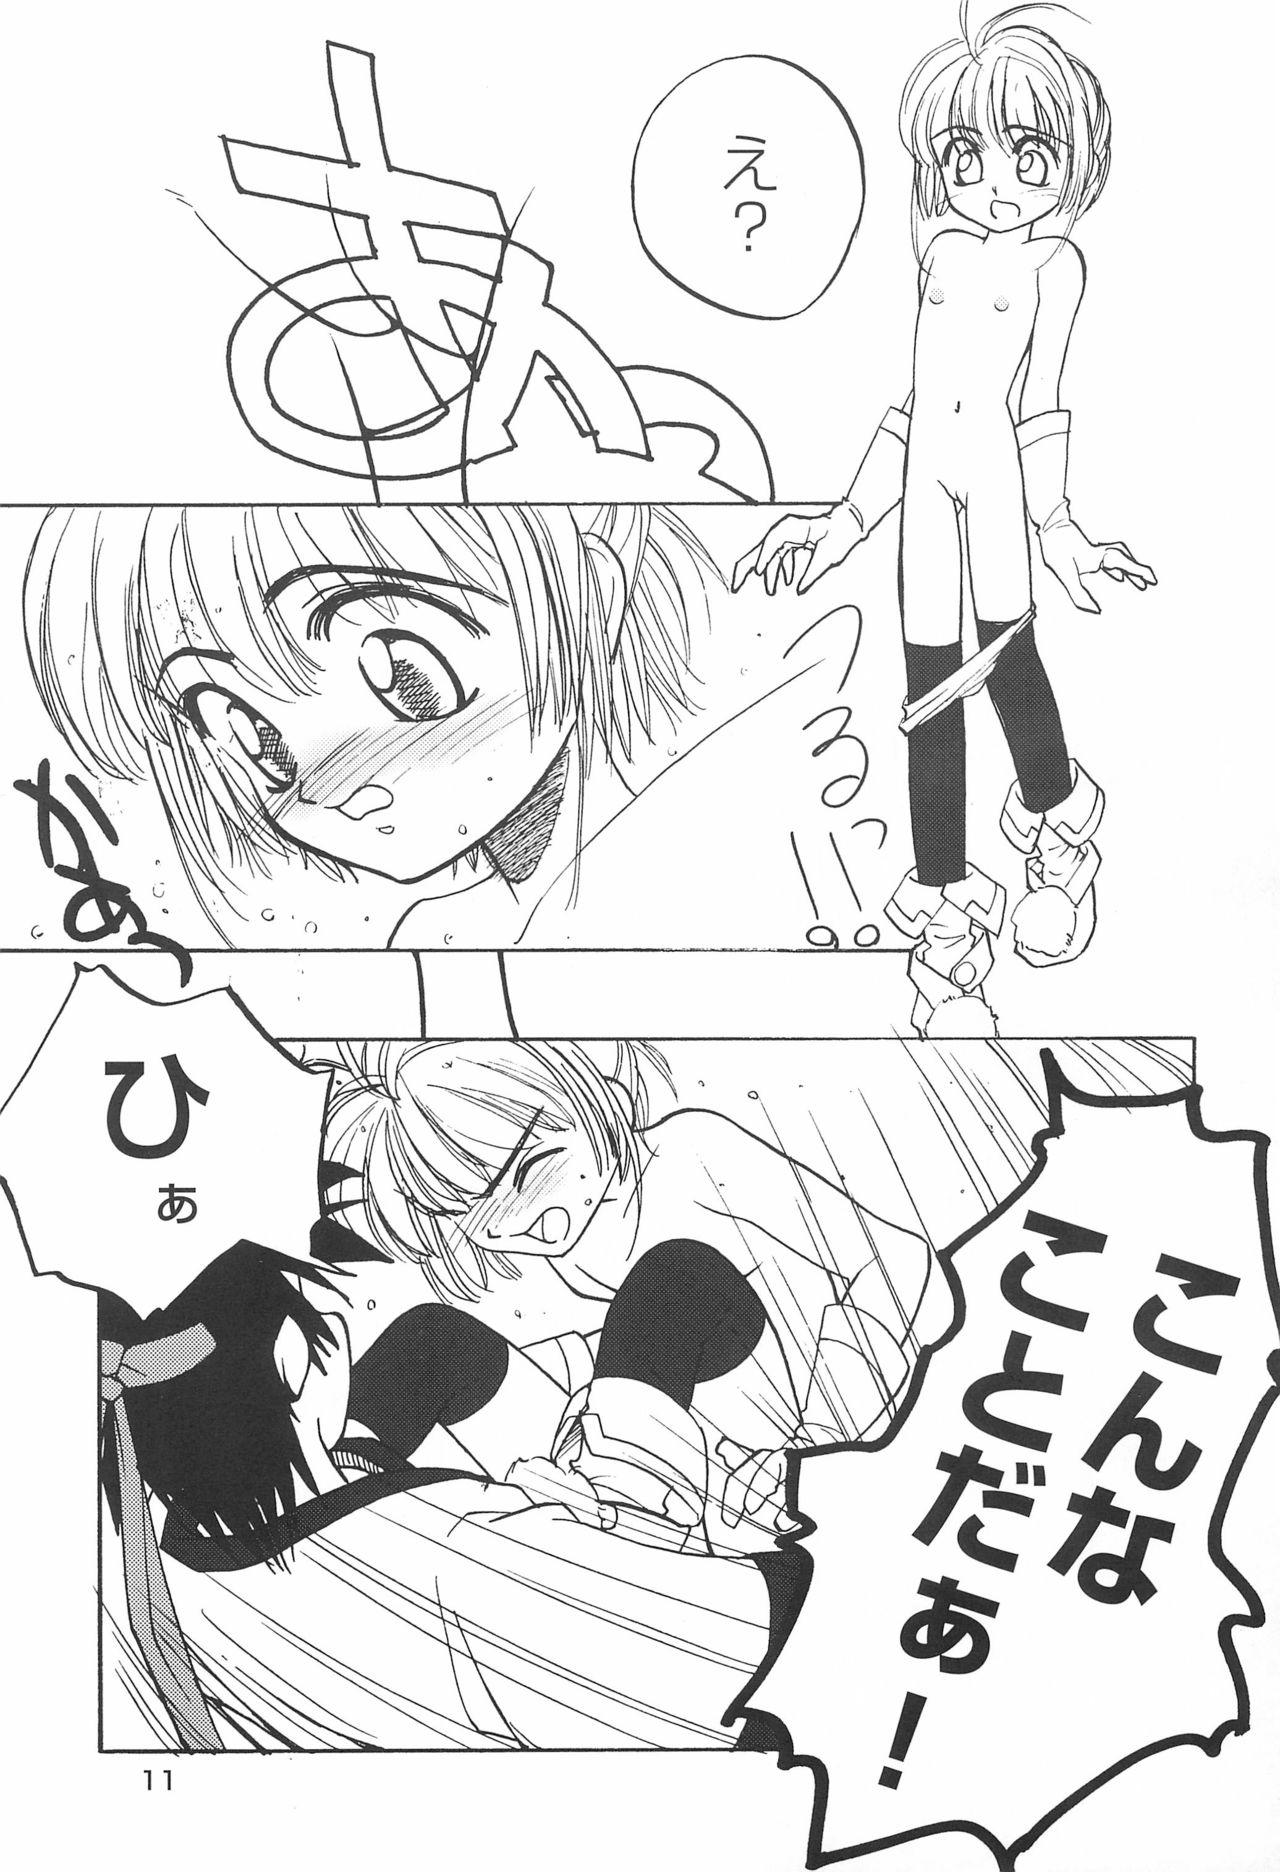 Nalgas SAKURA SECOND - Cardcaptor sakura Rurouni kenshin Lesbians - Page 11